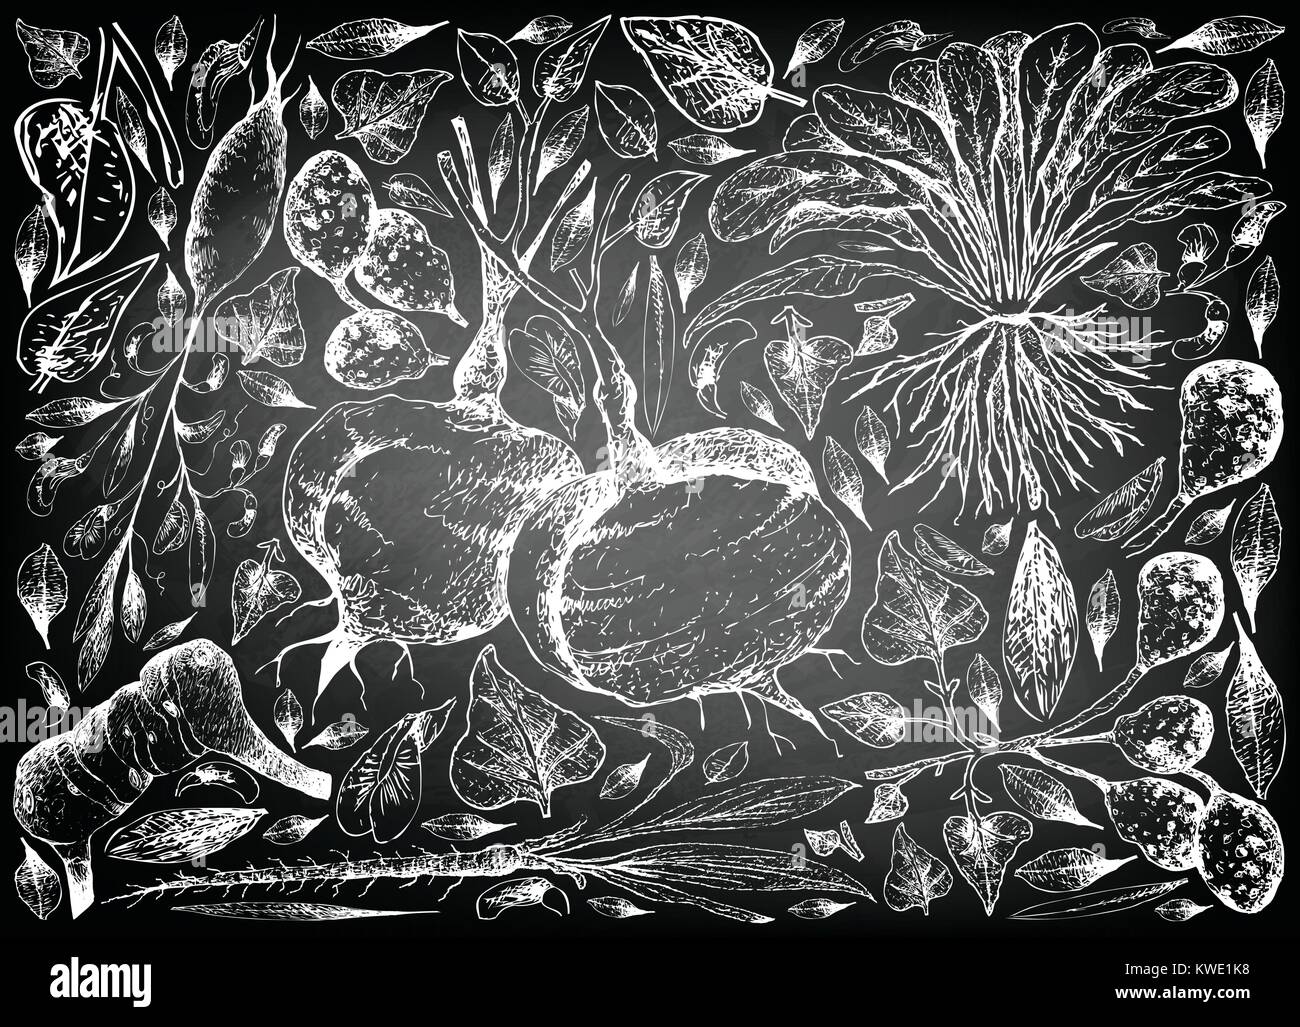 Root and Tuberous Vegetables, Illustration Hand Drawn Sketch of Ulluco, Skirret, Scorzonera, Jicama, Galangal and Earthnut Pea Plants on Black Chalkbo Stock Vector